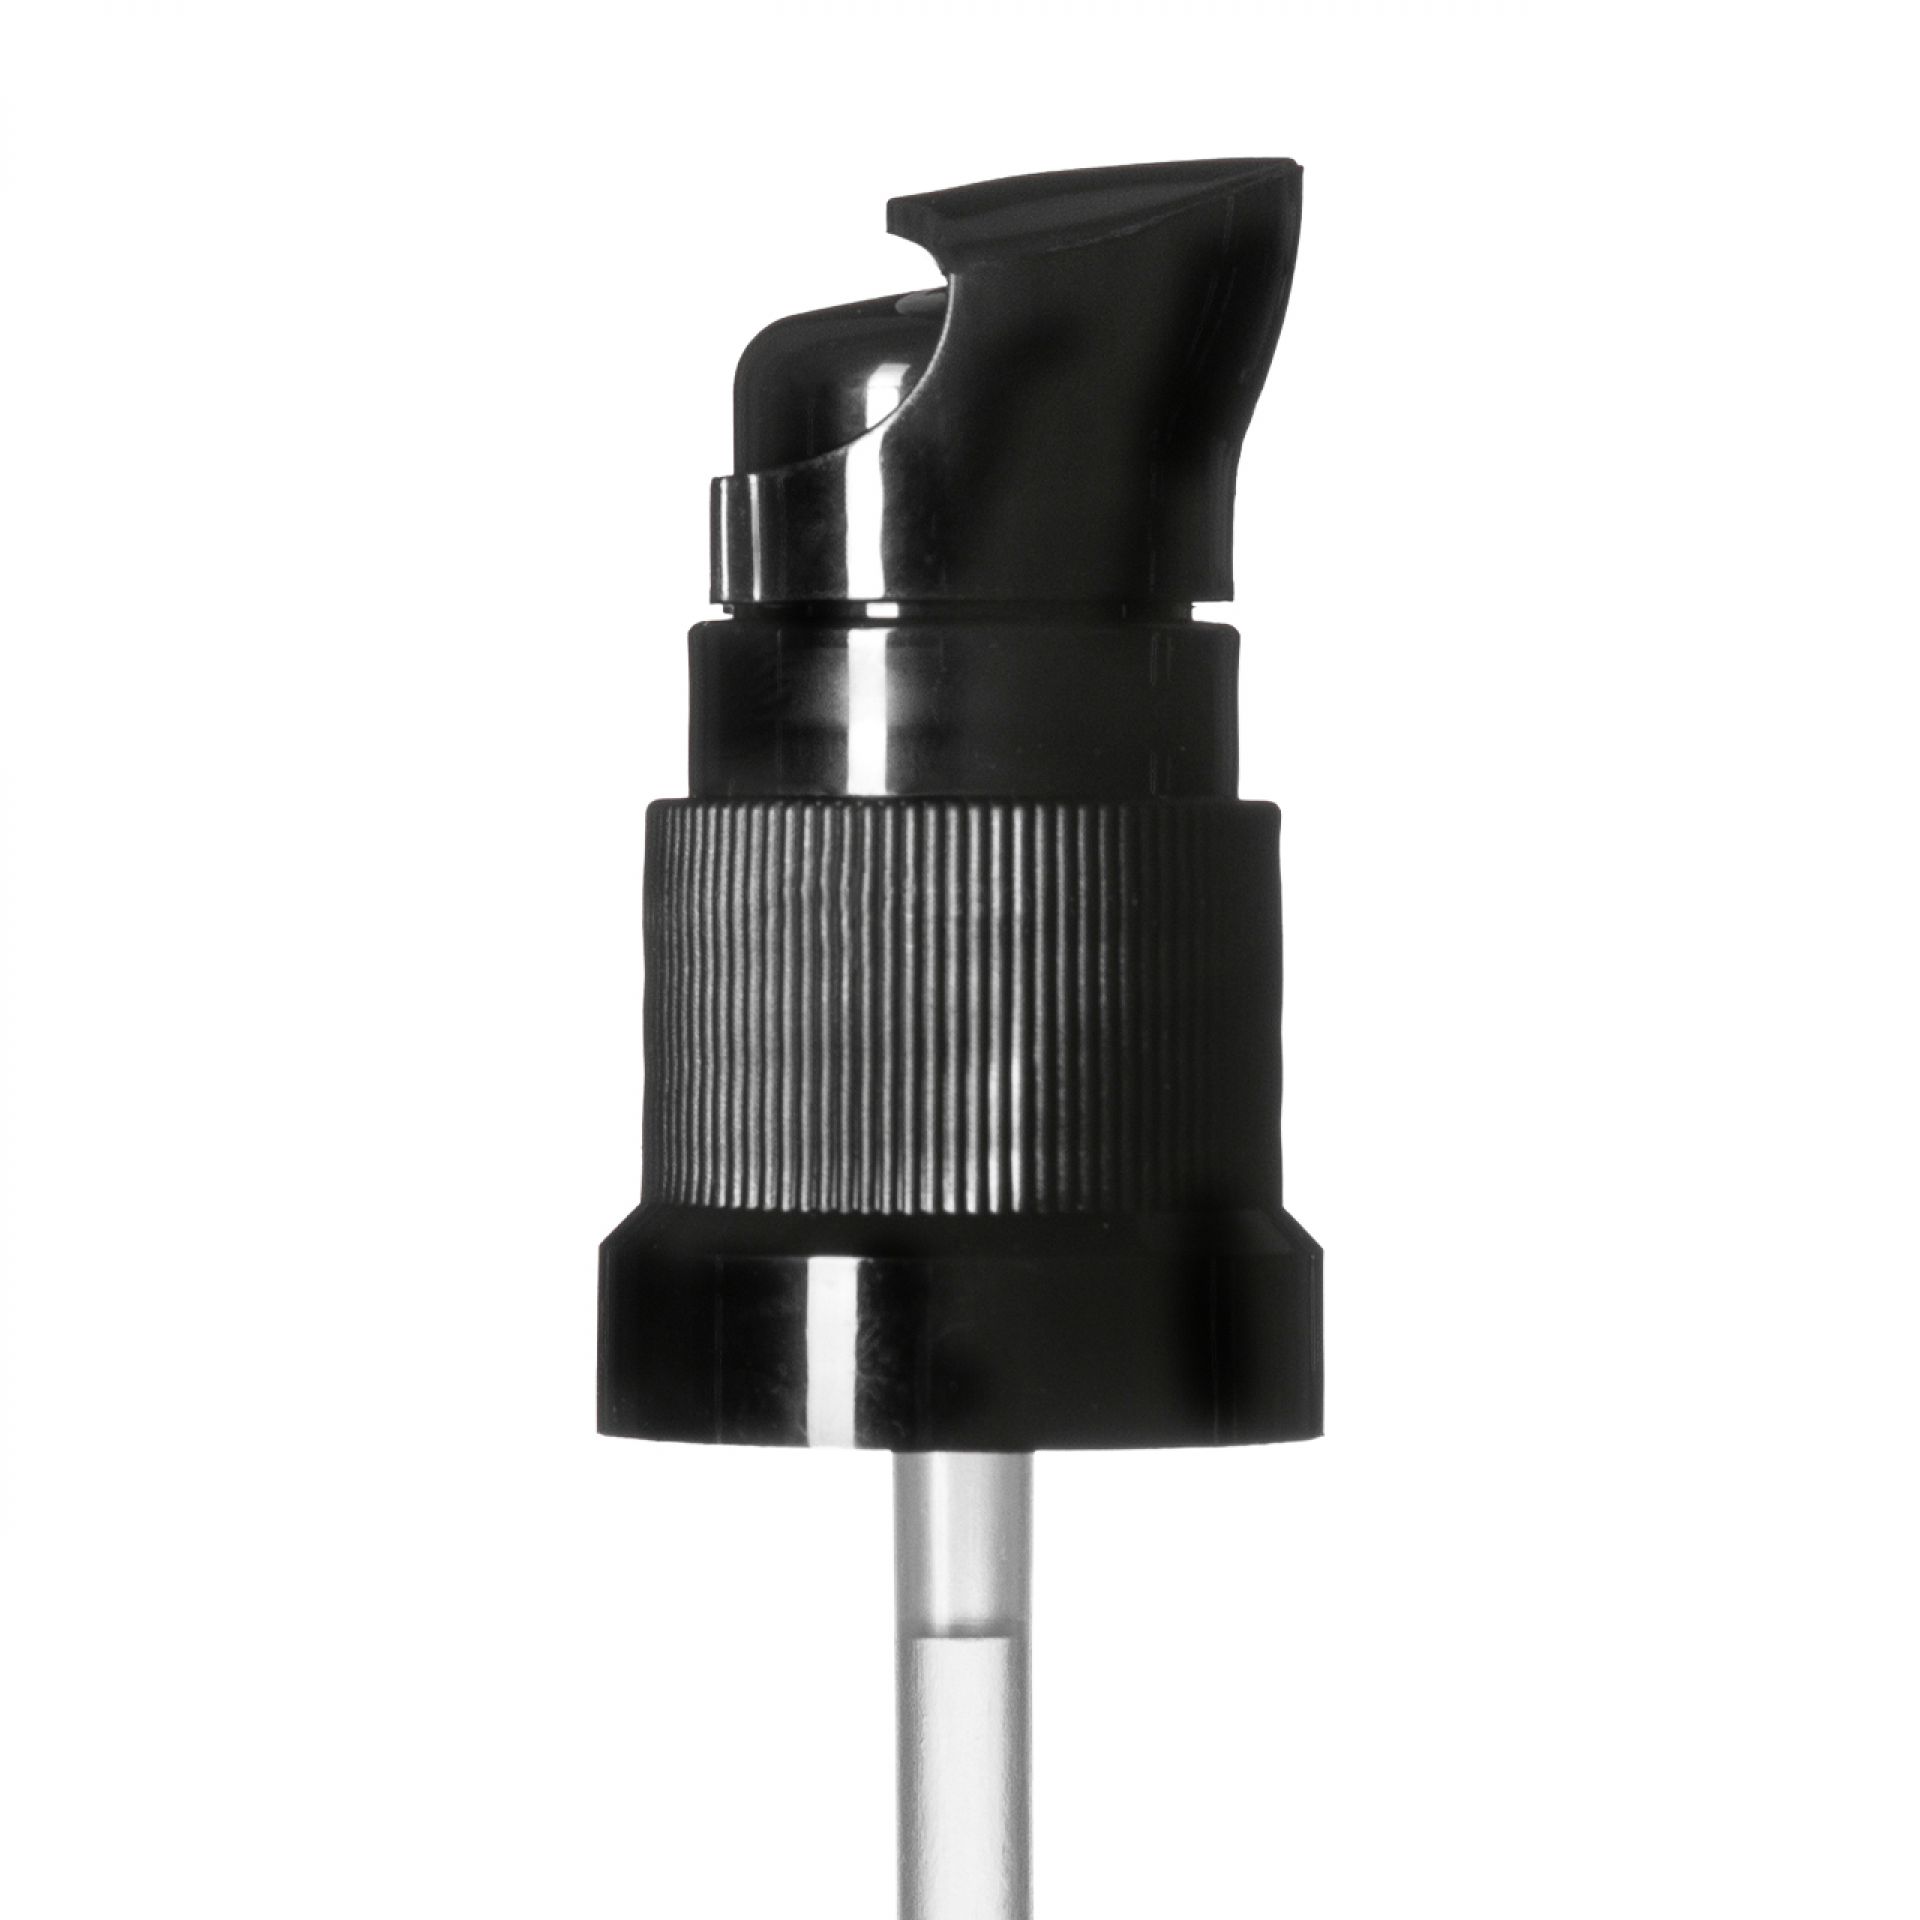 Lotion pump Metropolitan DIN18, PP, black, dose 0.14ml, black security clip (Orion 10-63)